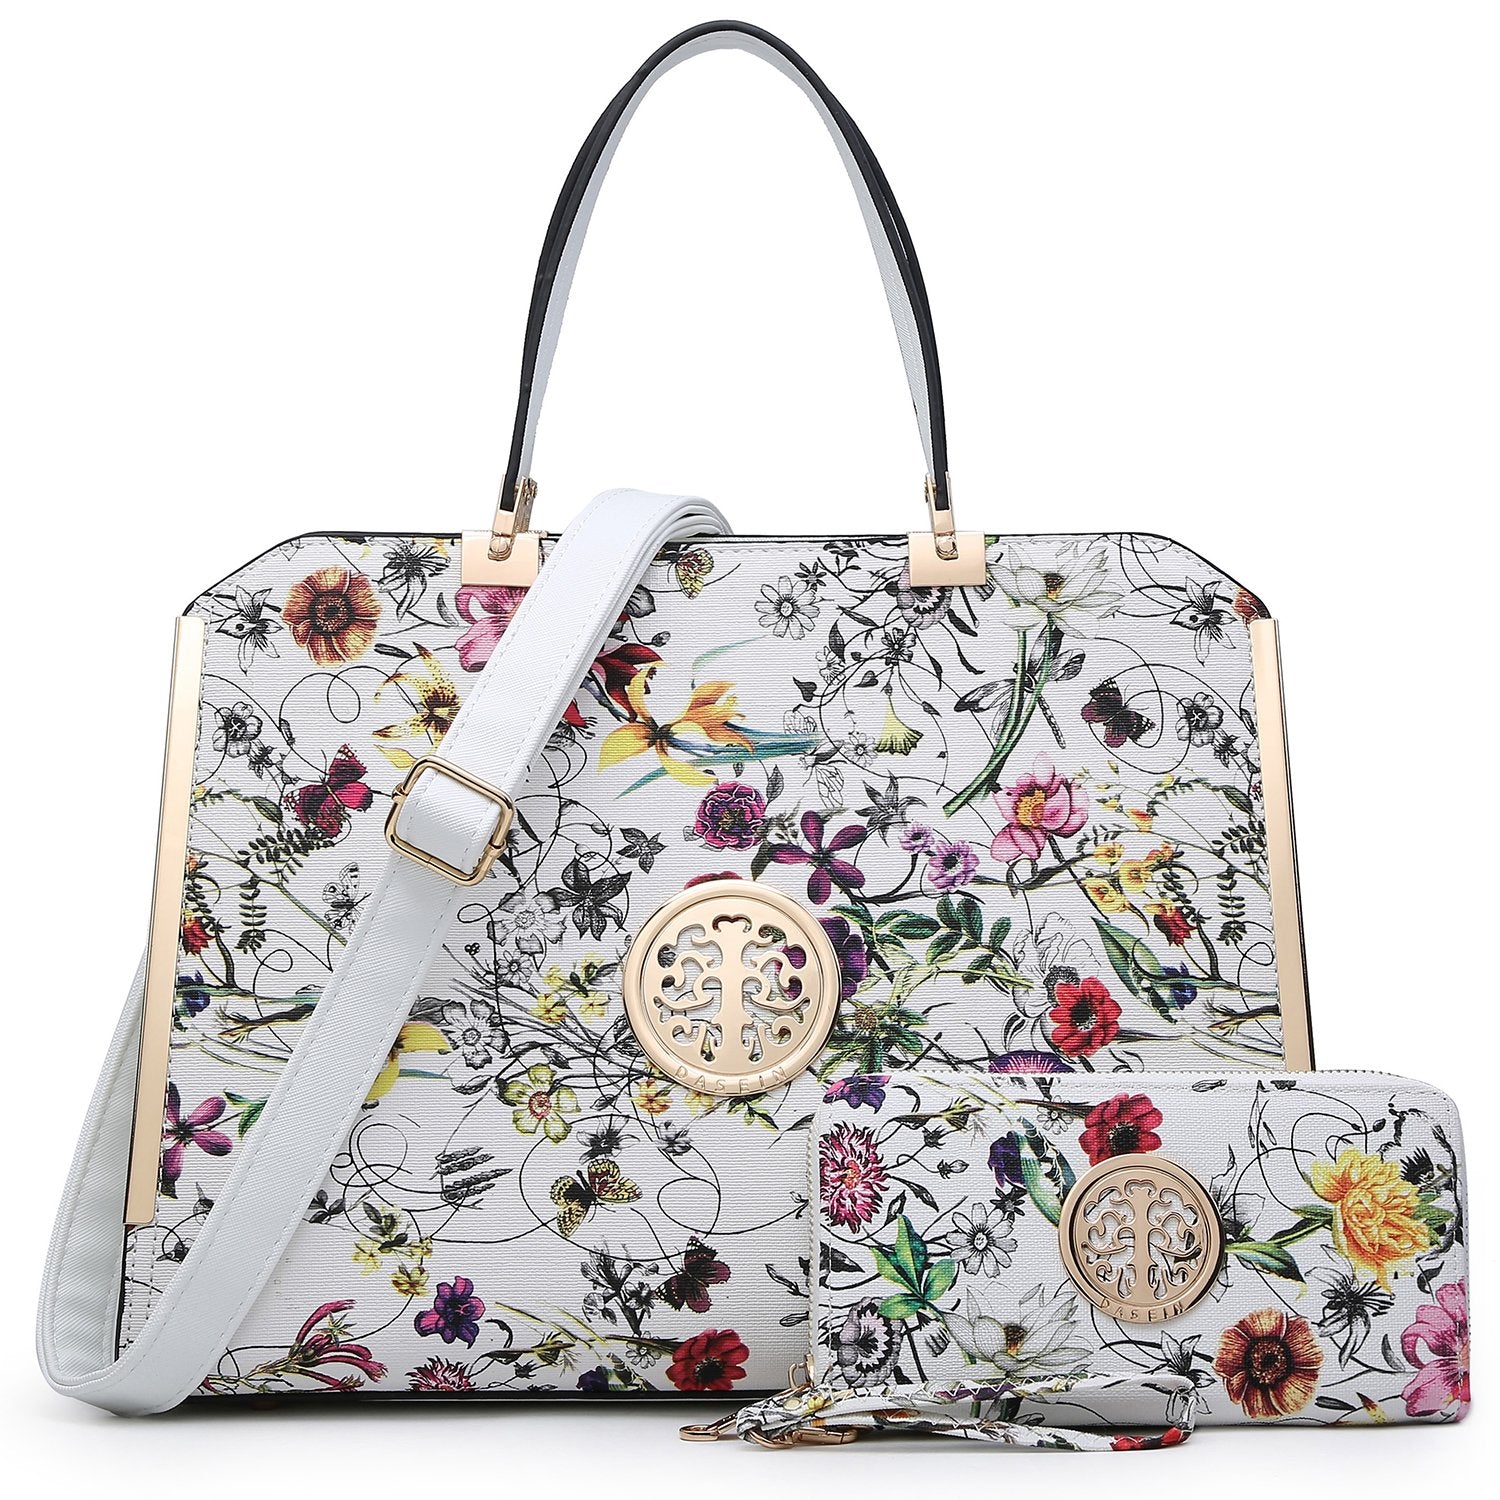 Floral Print Emblem Handbag with Matching Wallet – Dasein Bags